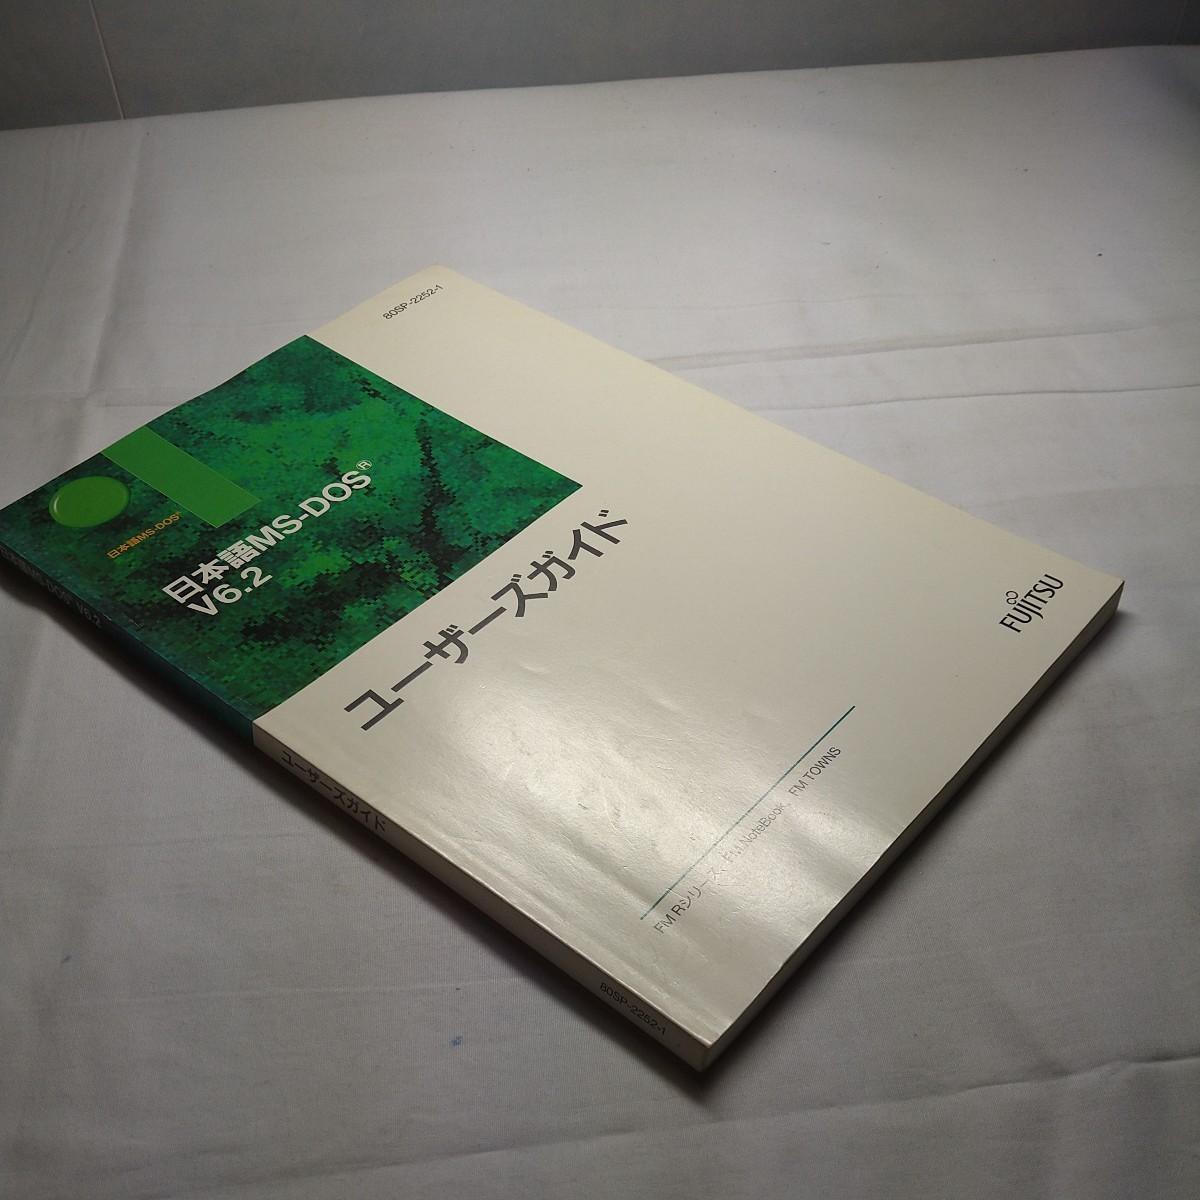 n-939◆富士通 F-BASIC v6.3 リファレンス 日本語MS-DOS V6.2 希少 本 古本 写真集 雑誌 印刷物 ◆ 状態は画像で確認してください。_画像8